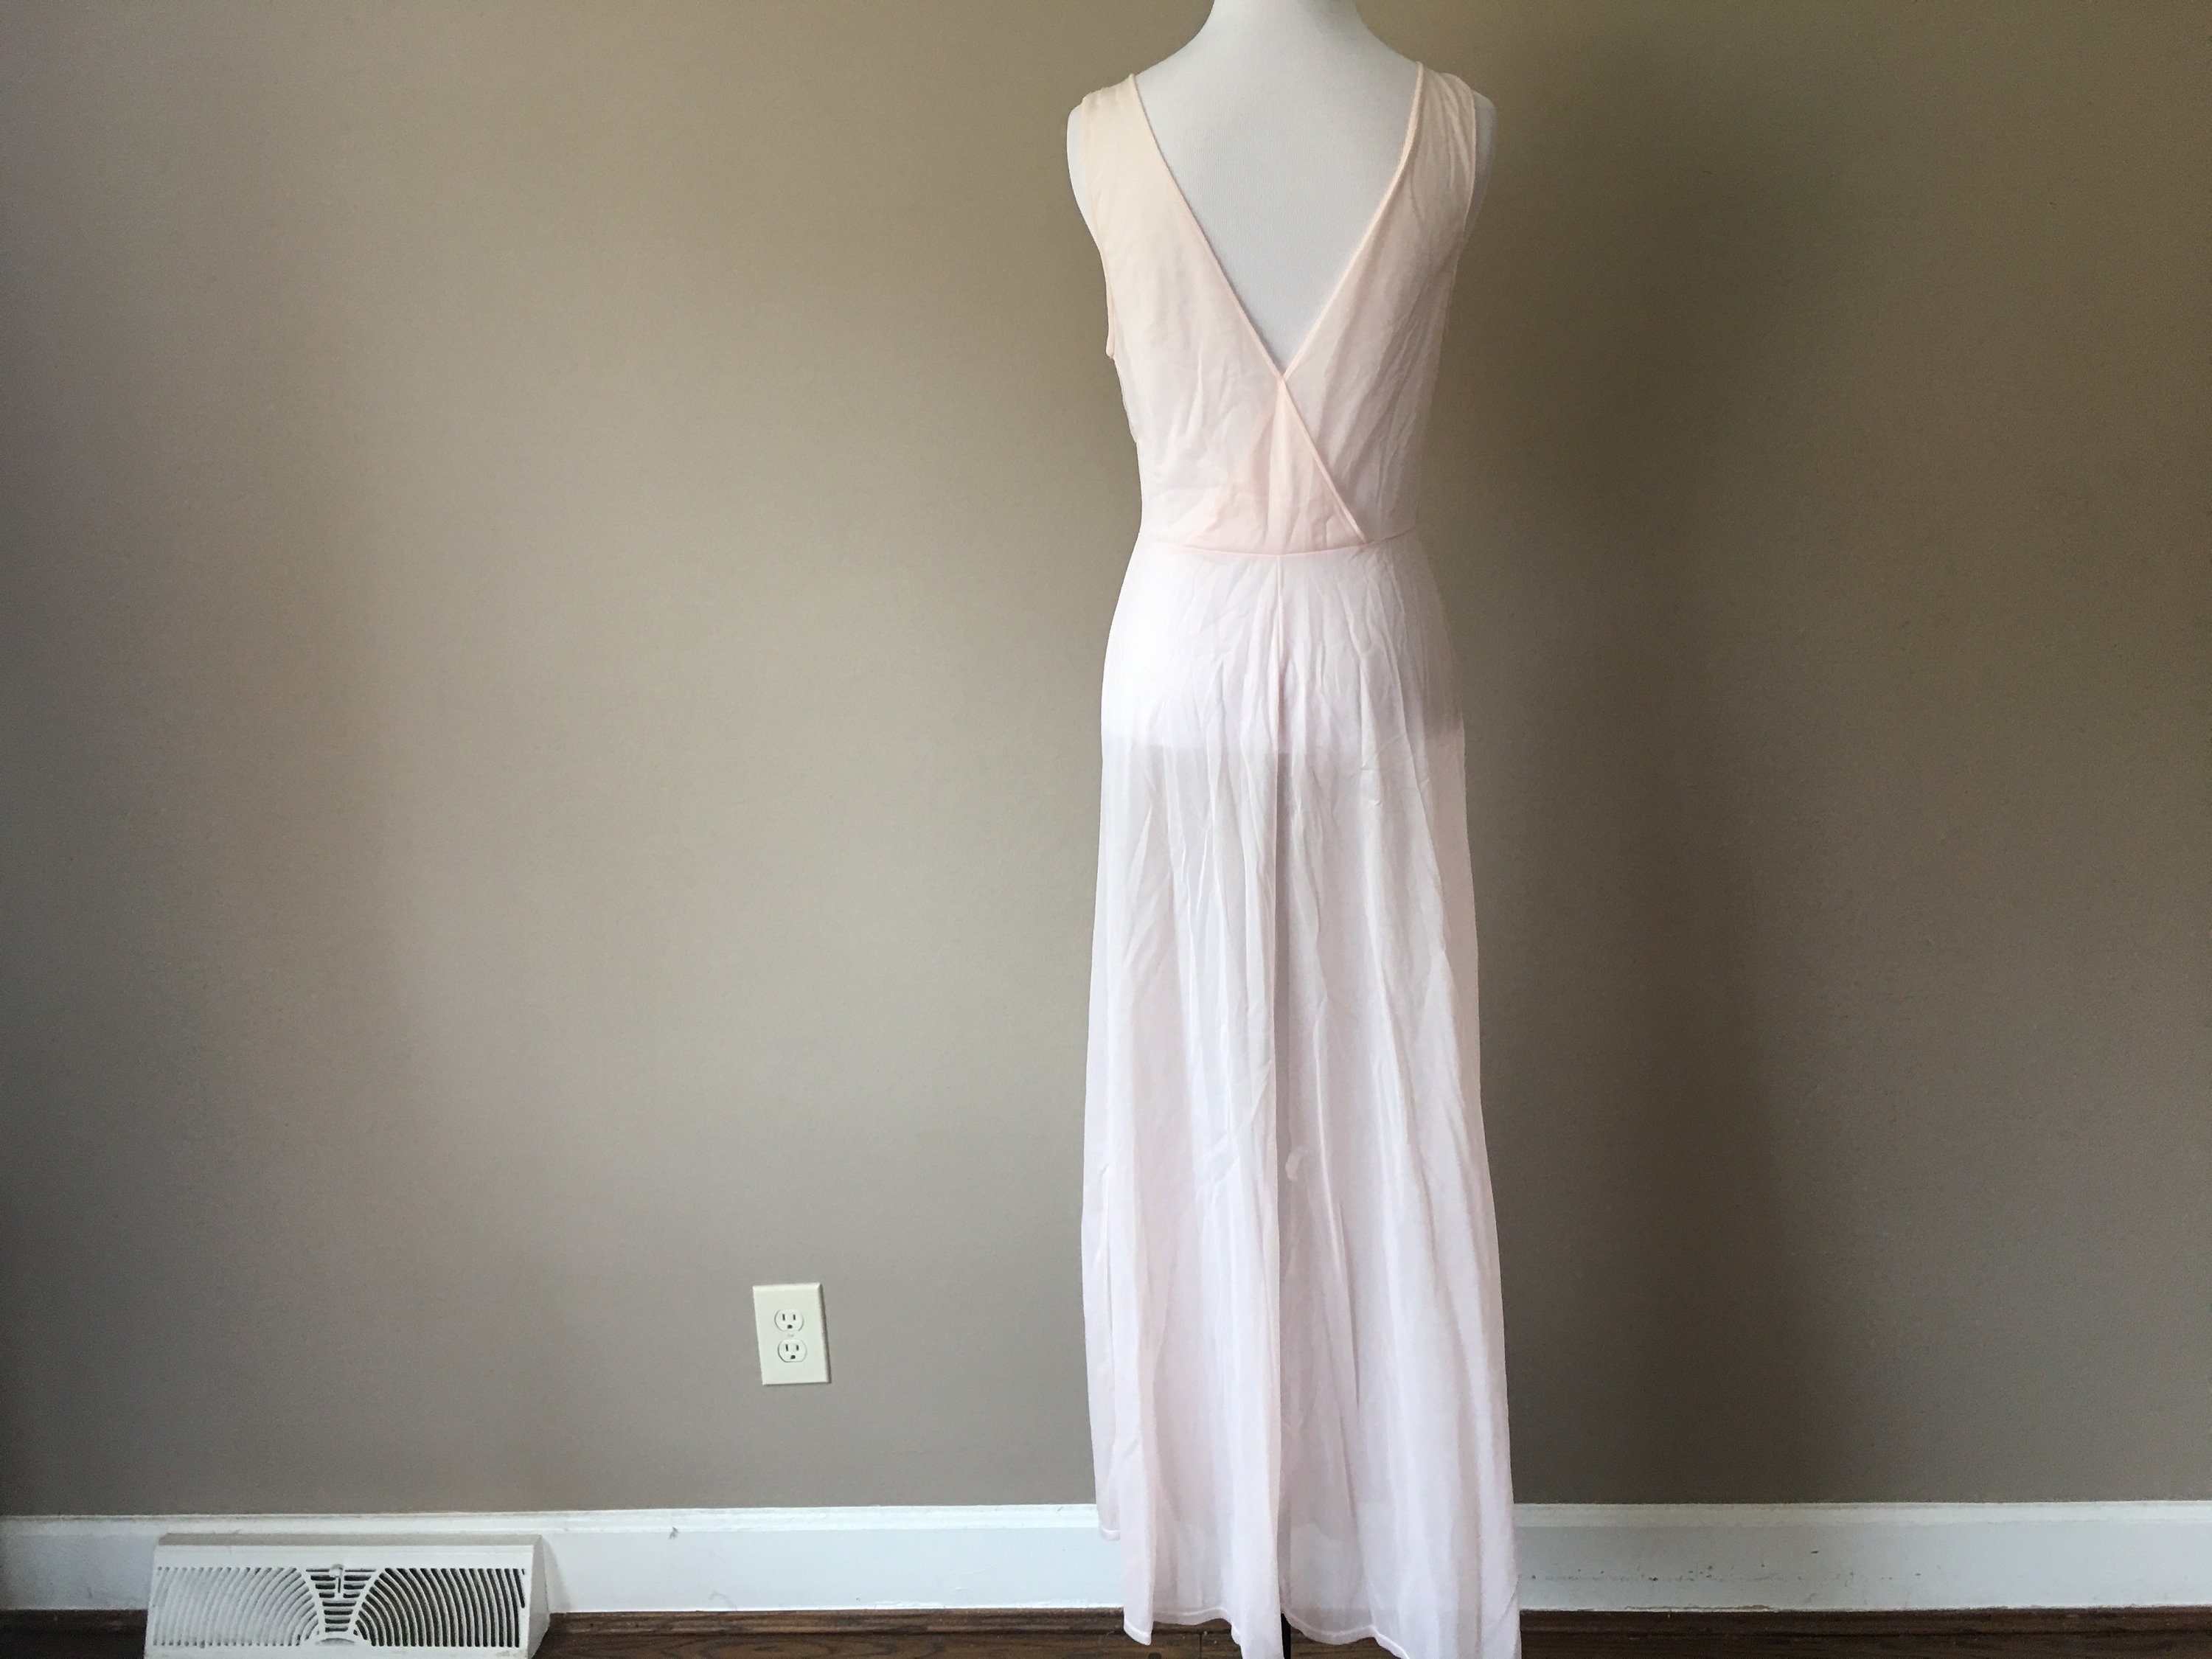 VANITY FAIR Long Slip Nightgown - Size 34 32/40 Off White/ Beige